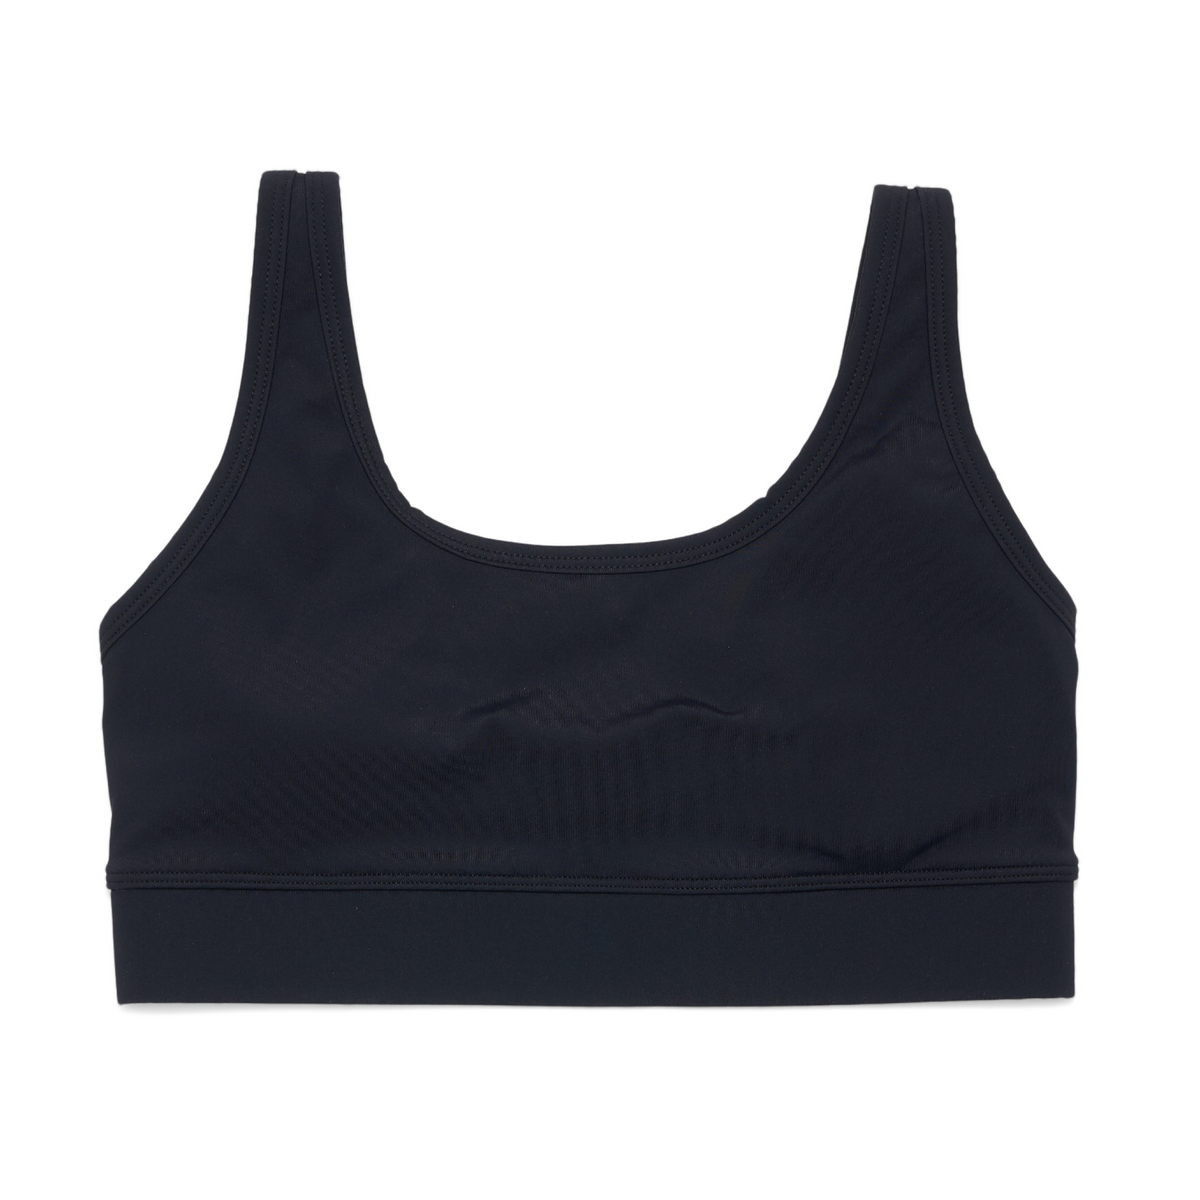 Entyinea Minimizer Bras for Women Fashion Comfort Sports Bras Black L